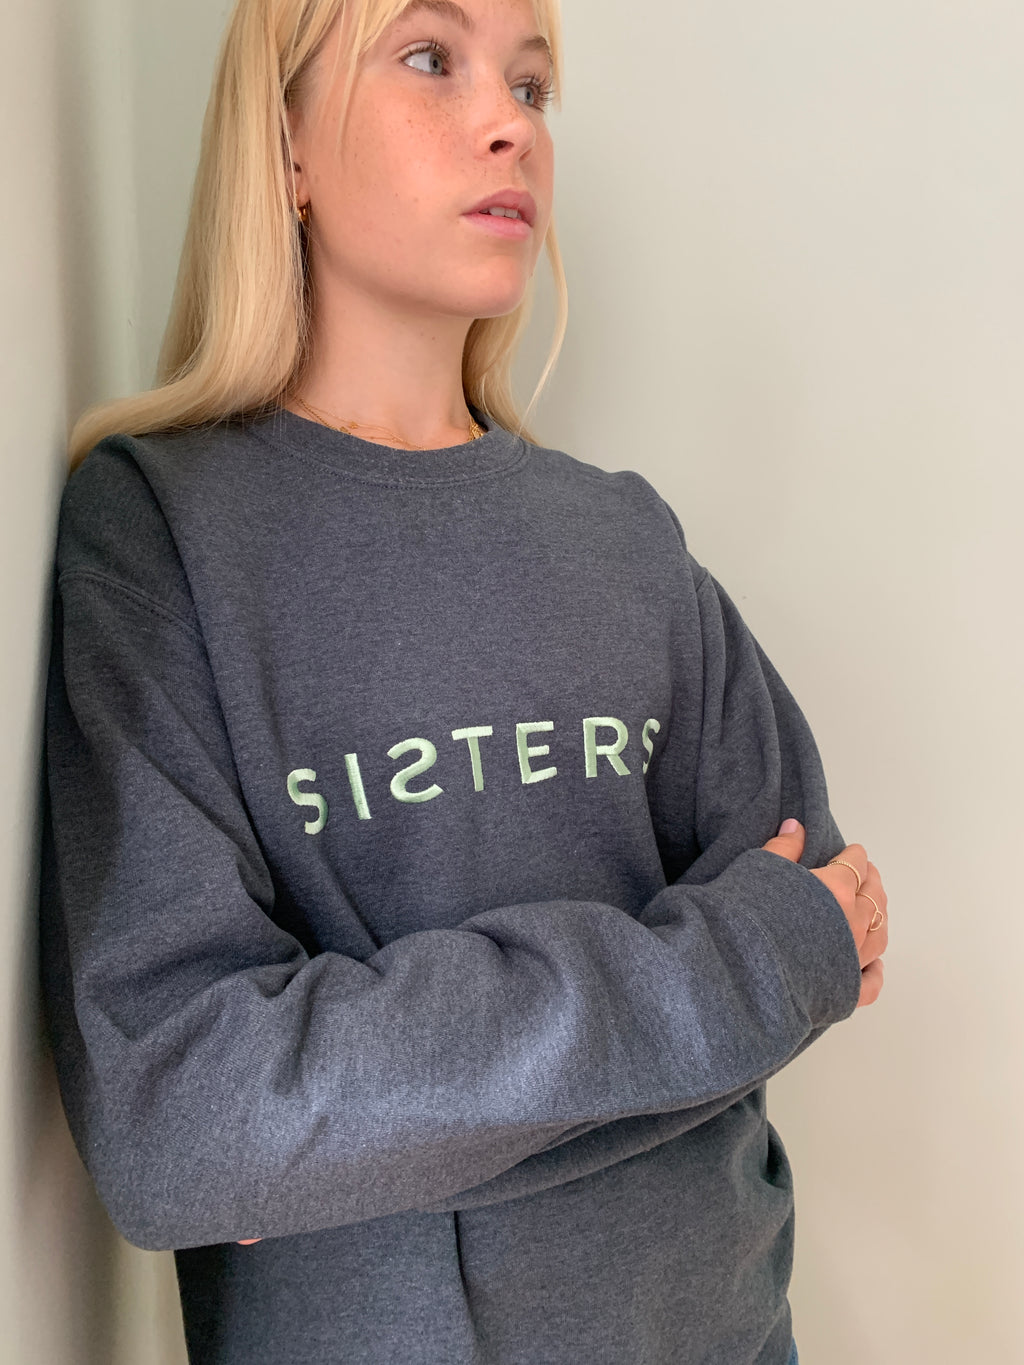 SISTERS embroidered sweatshirt small/medium S0201